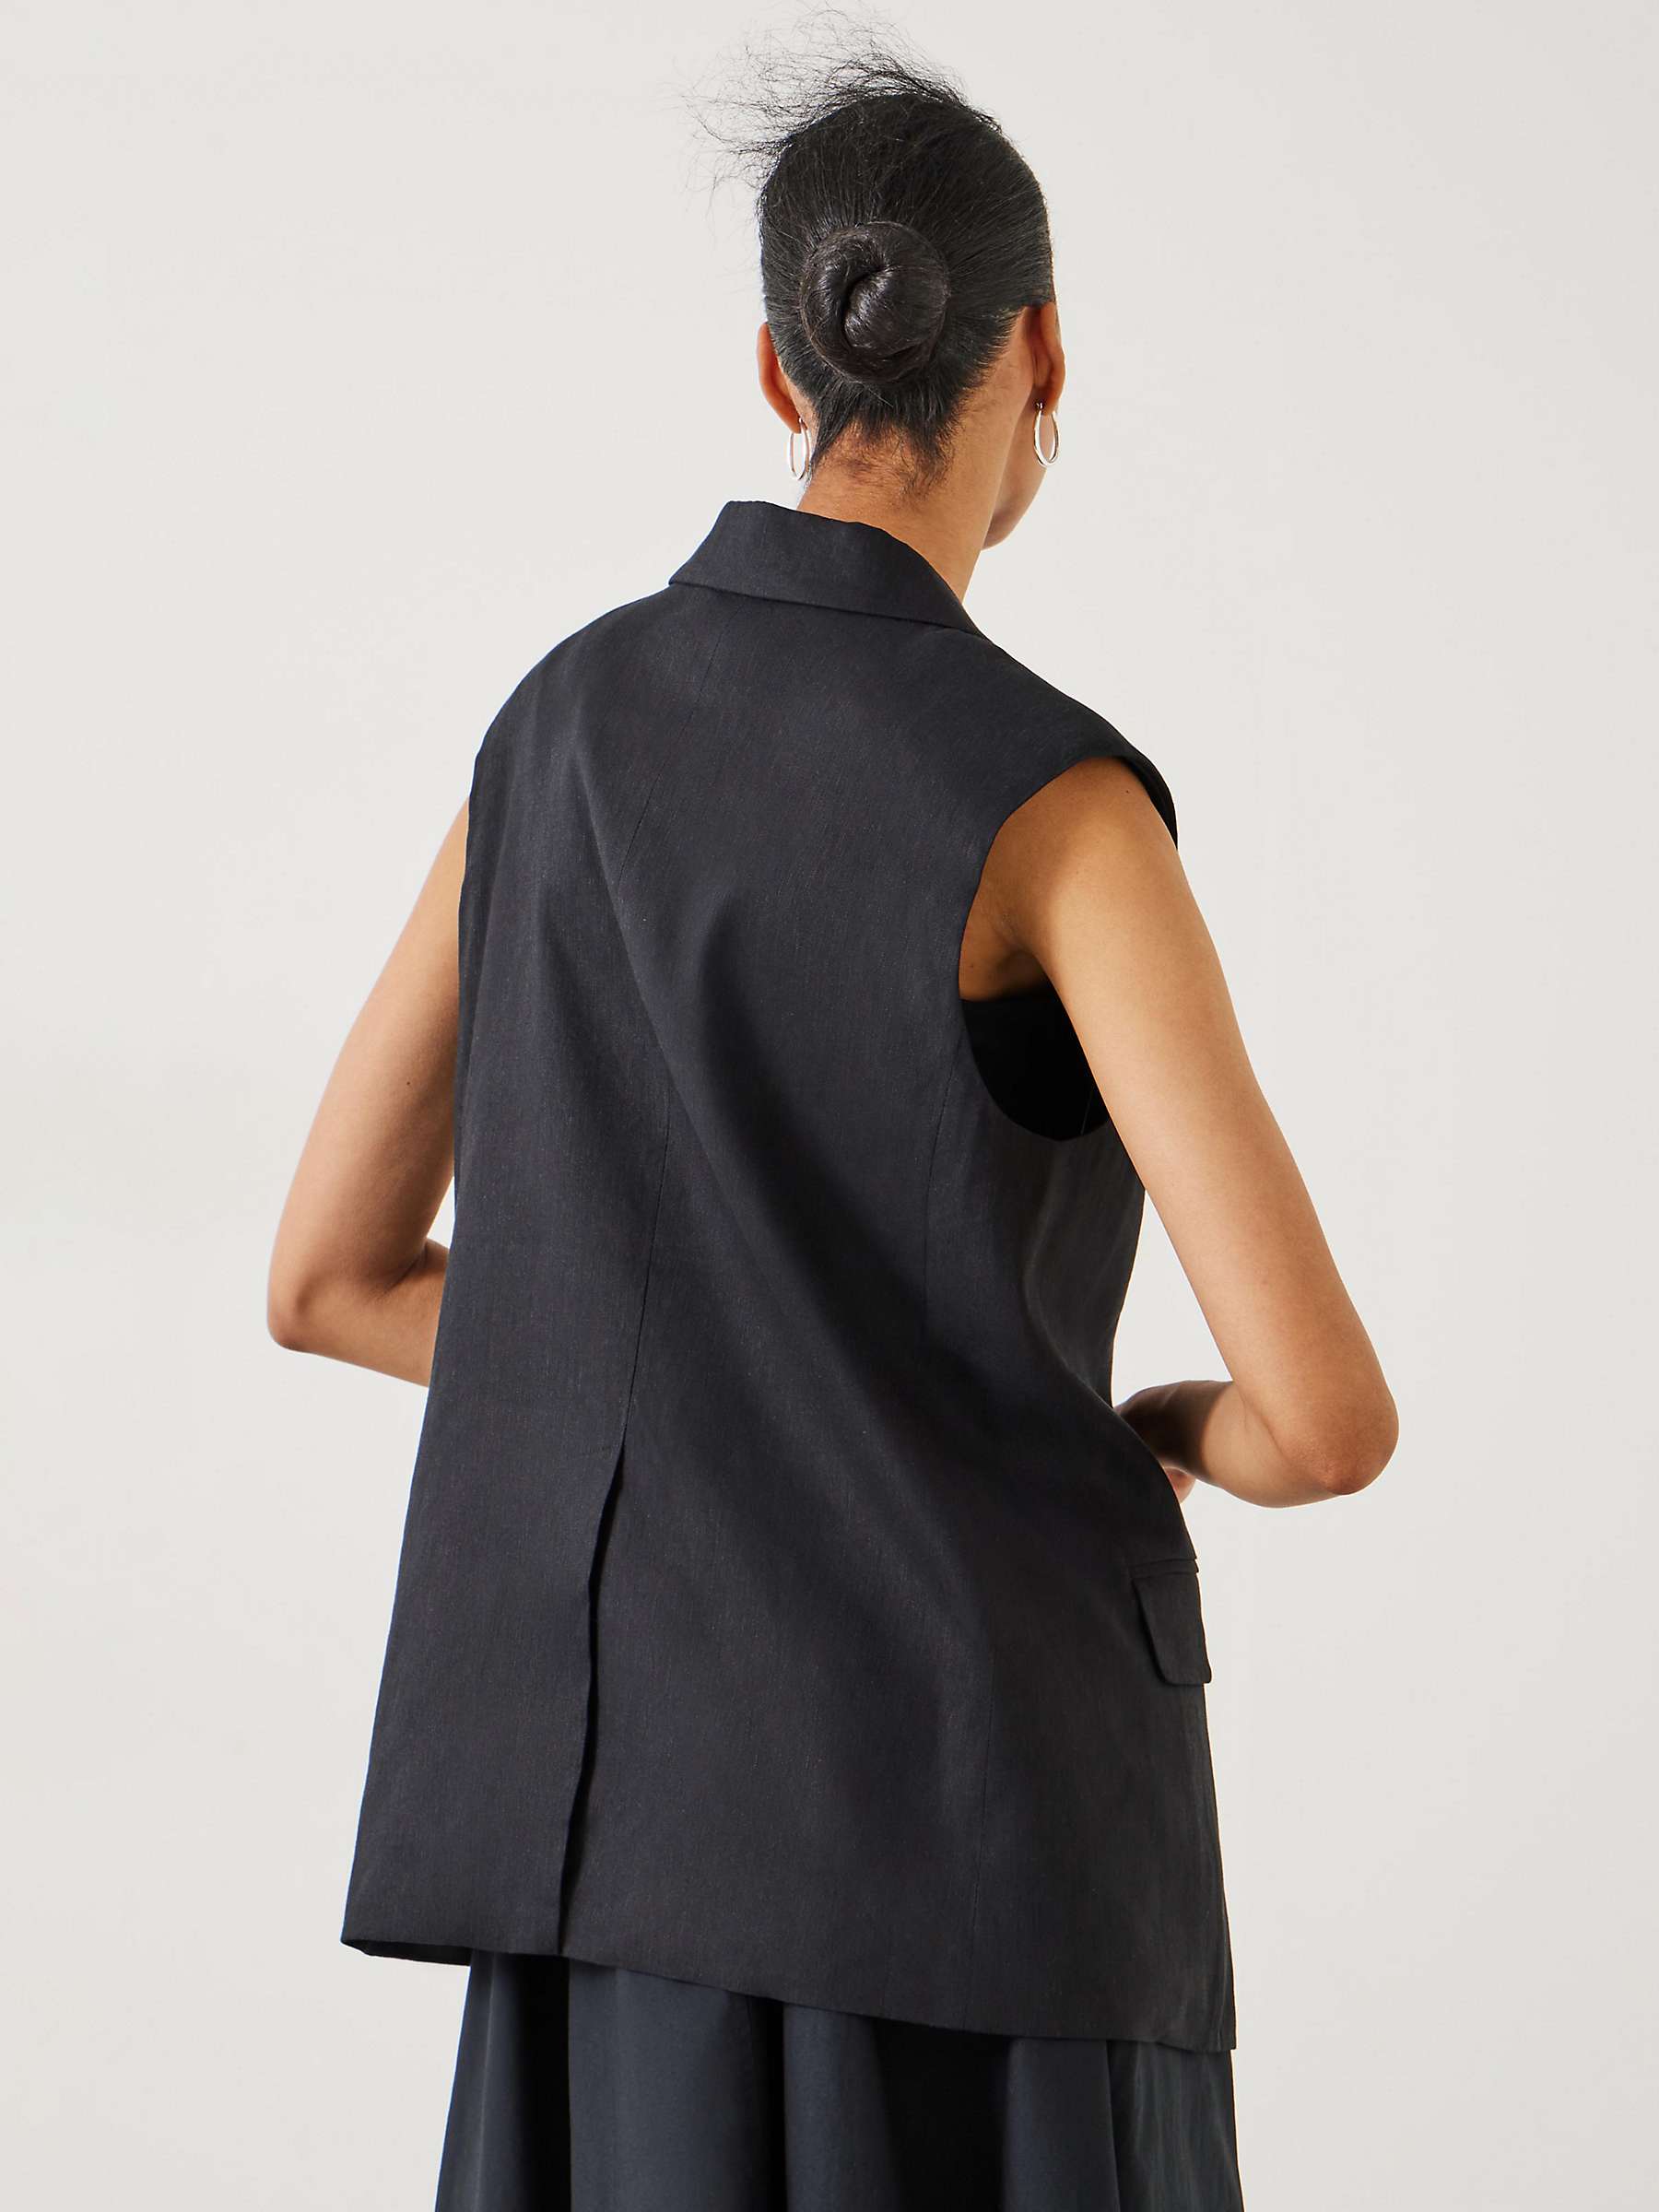 Buy HUSH Lana Linen Blend Waistcoat, Black Online at johnlewis.com